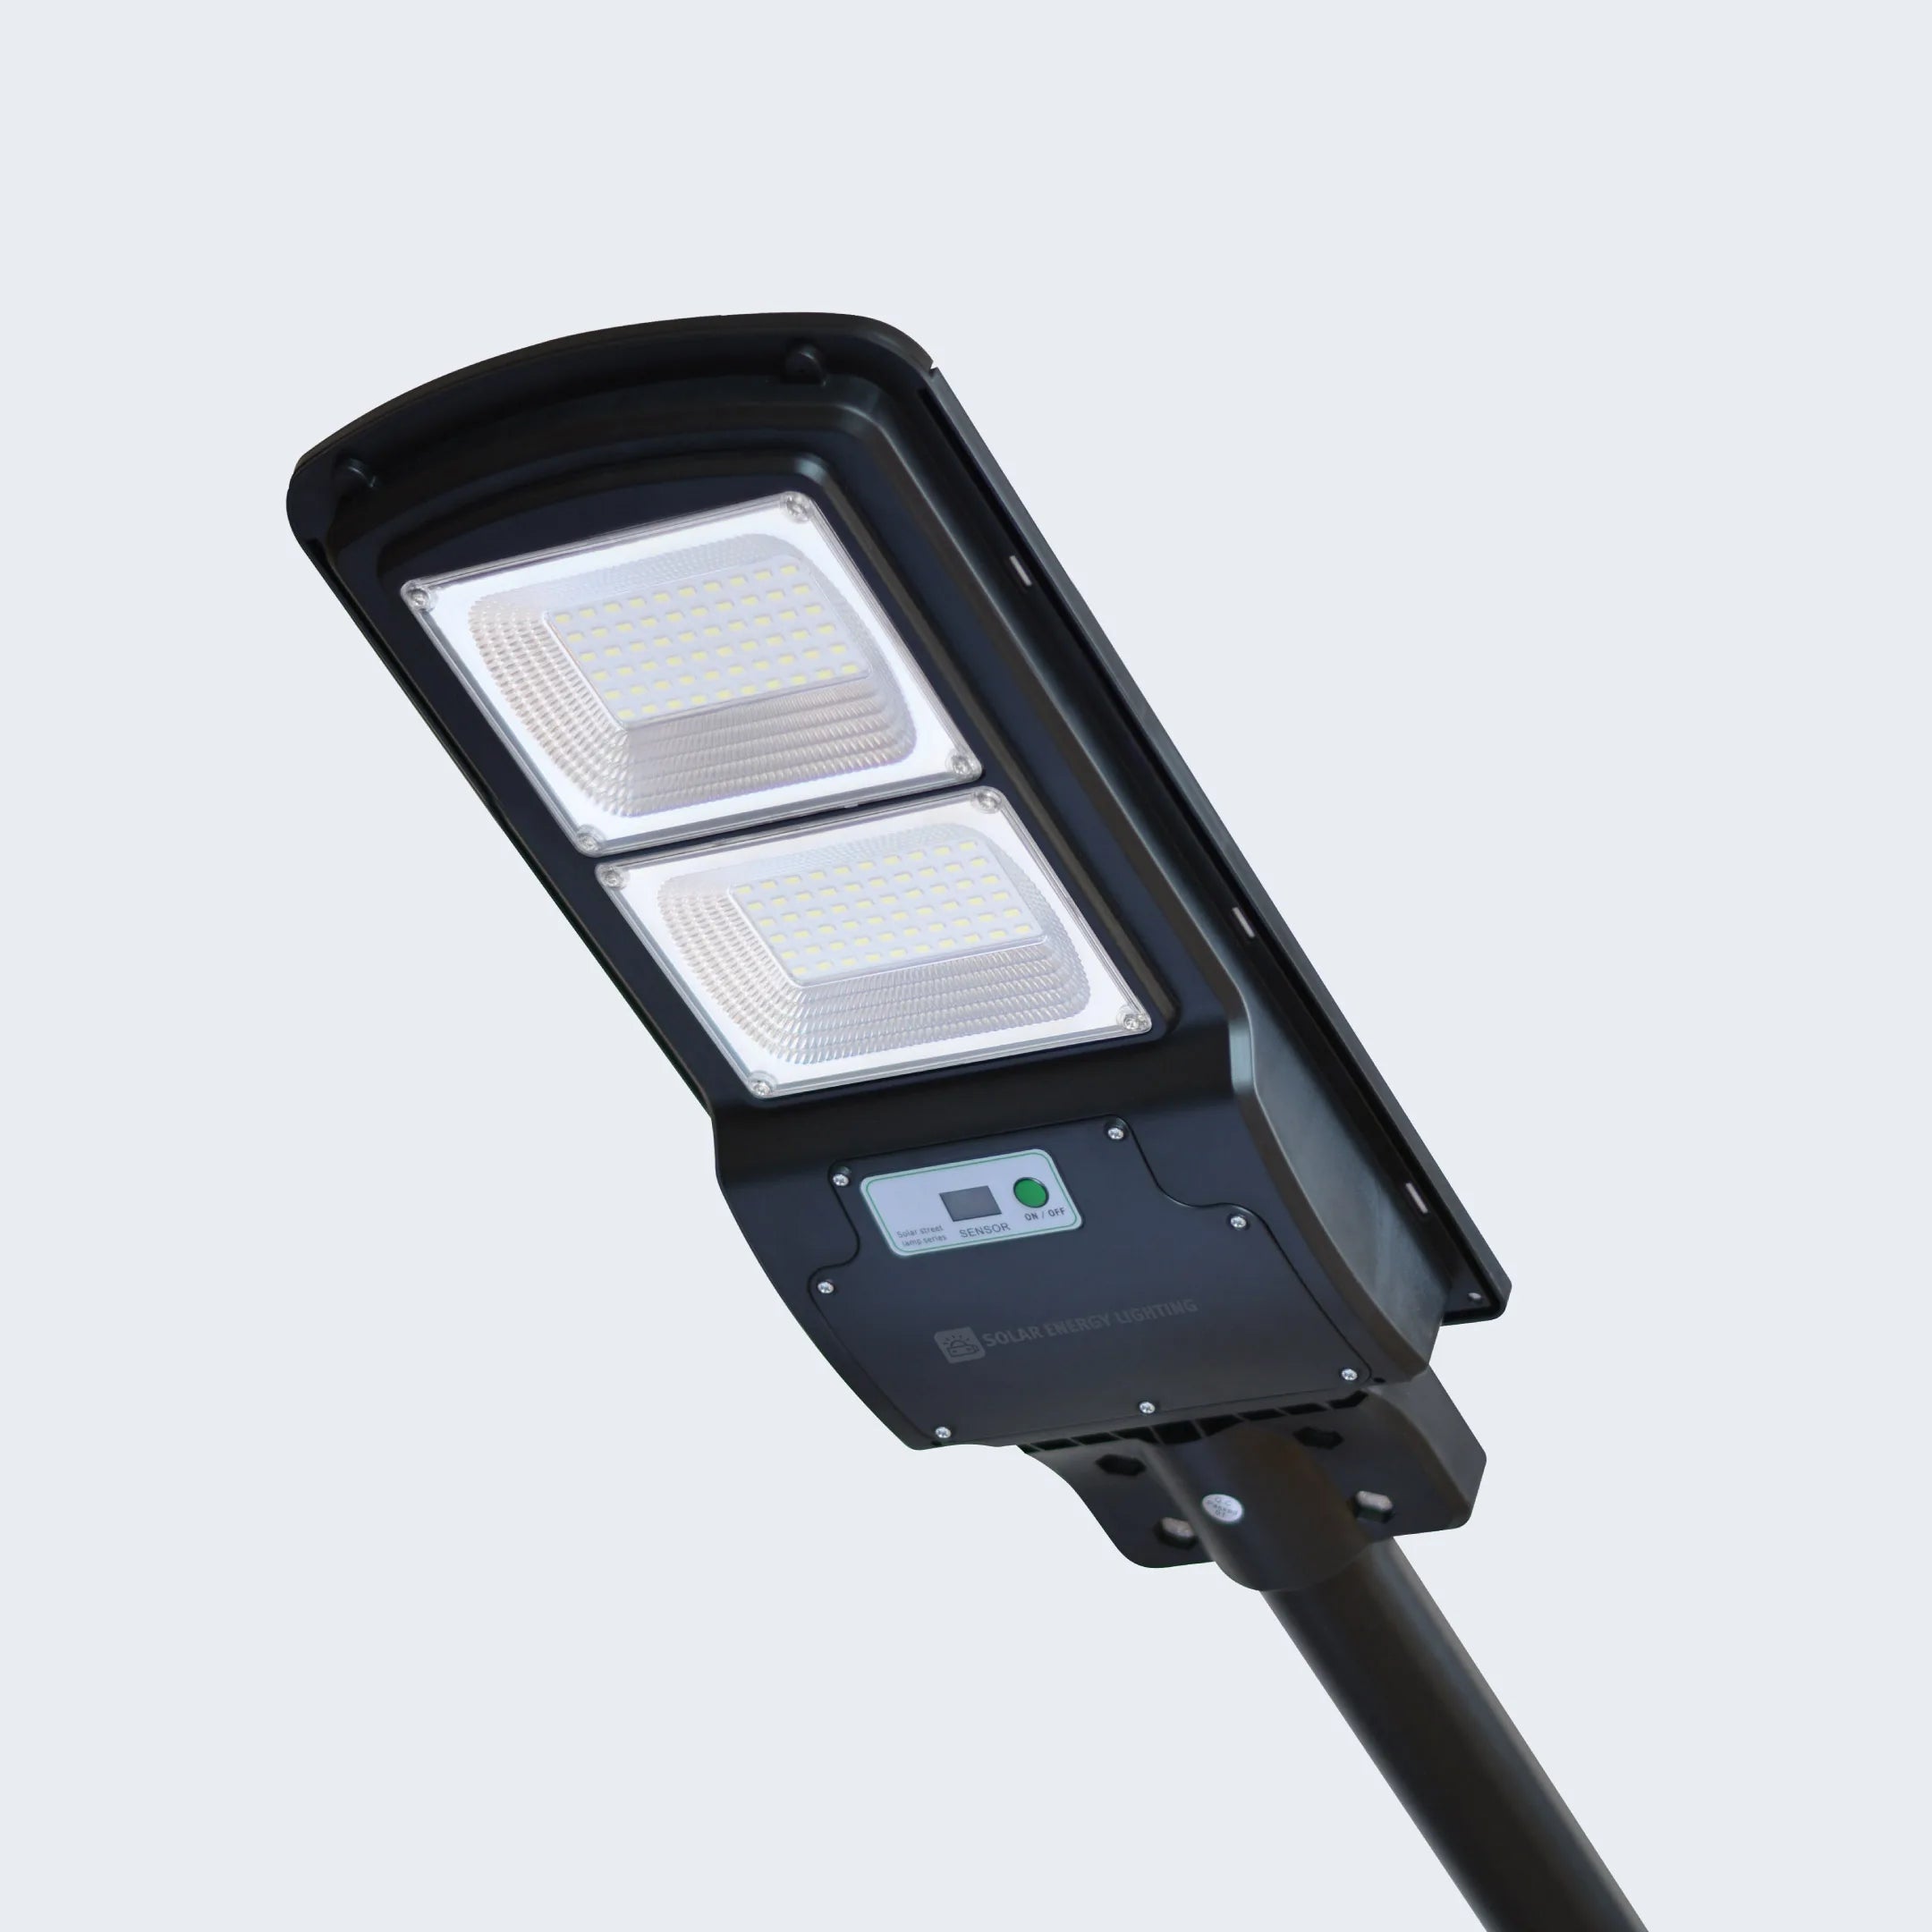 IlluminateSolarMega™ - The Ultimate 300W/6000 Lumens Ultra-Bright Solar Street Light